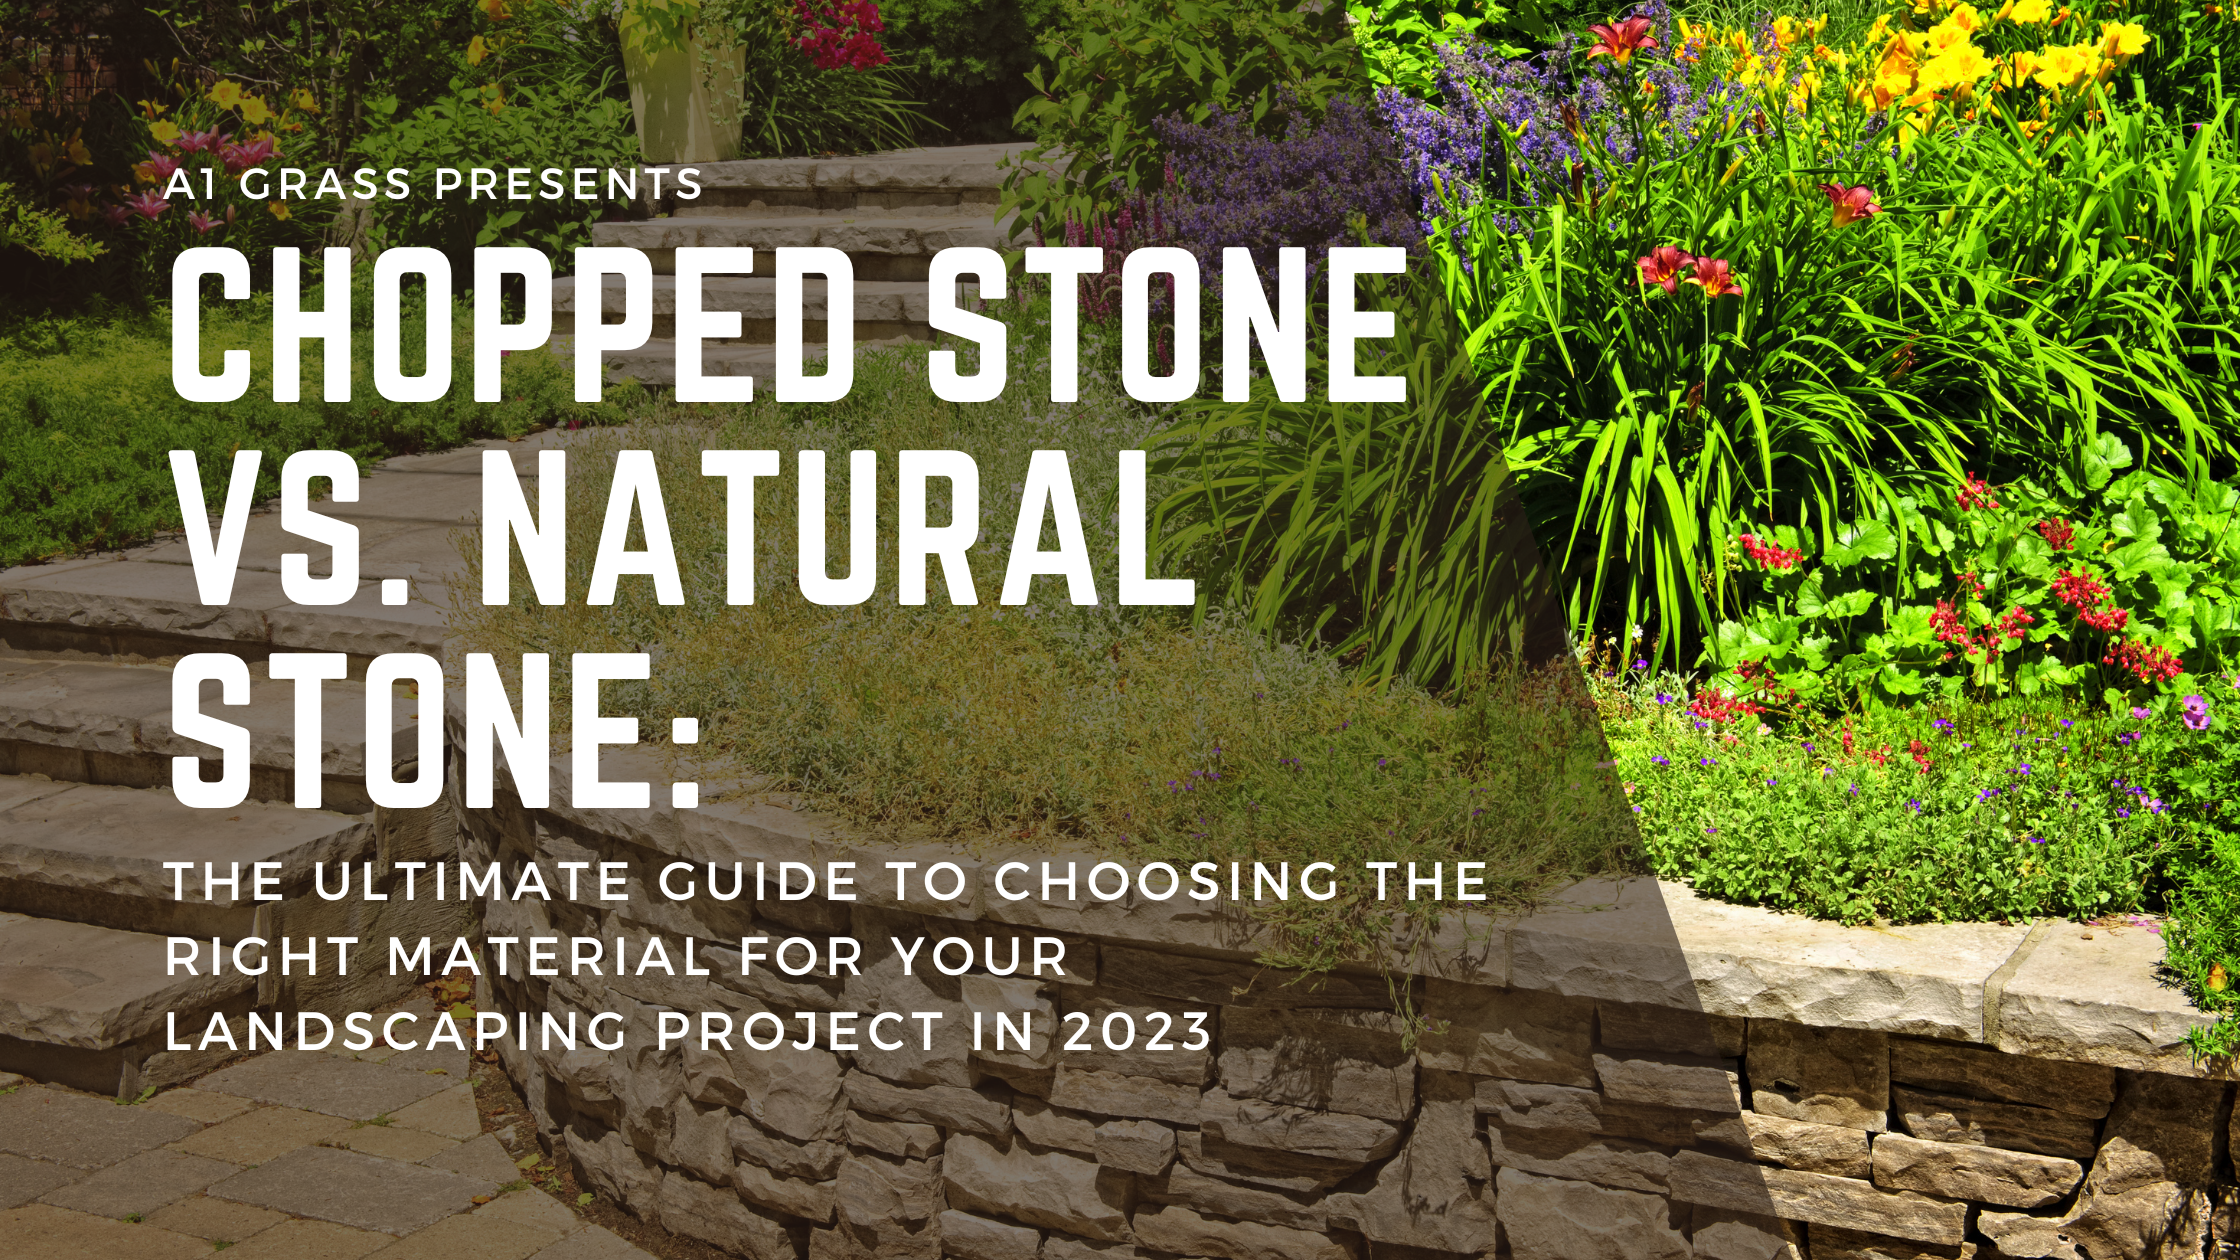 Chopped stone vs. natural stone